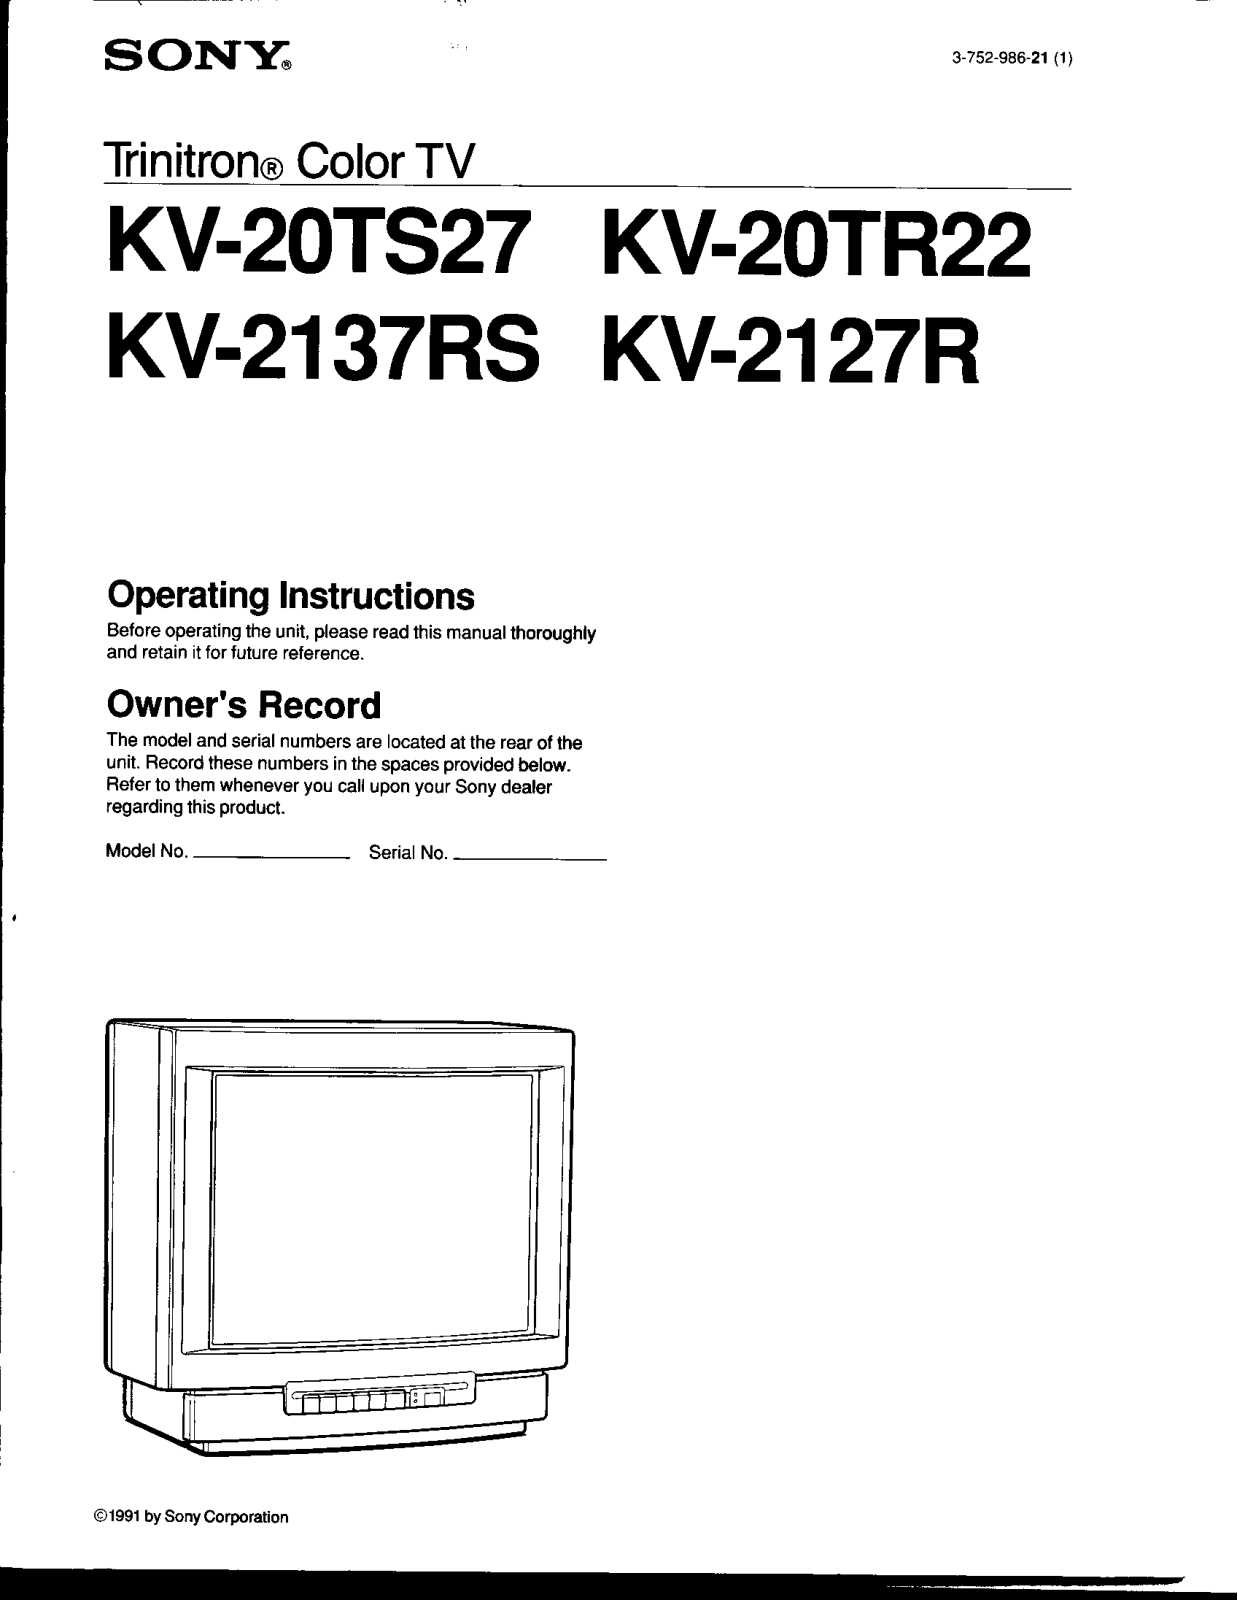 SONY KV-20TS27, KV-20TR22, KV-2137RS, KV-2127R User Manual